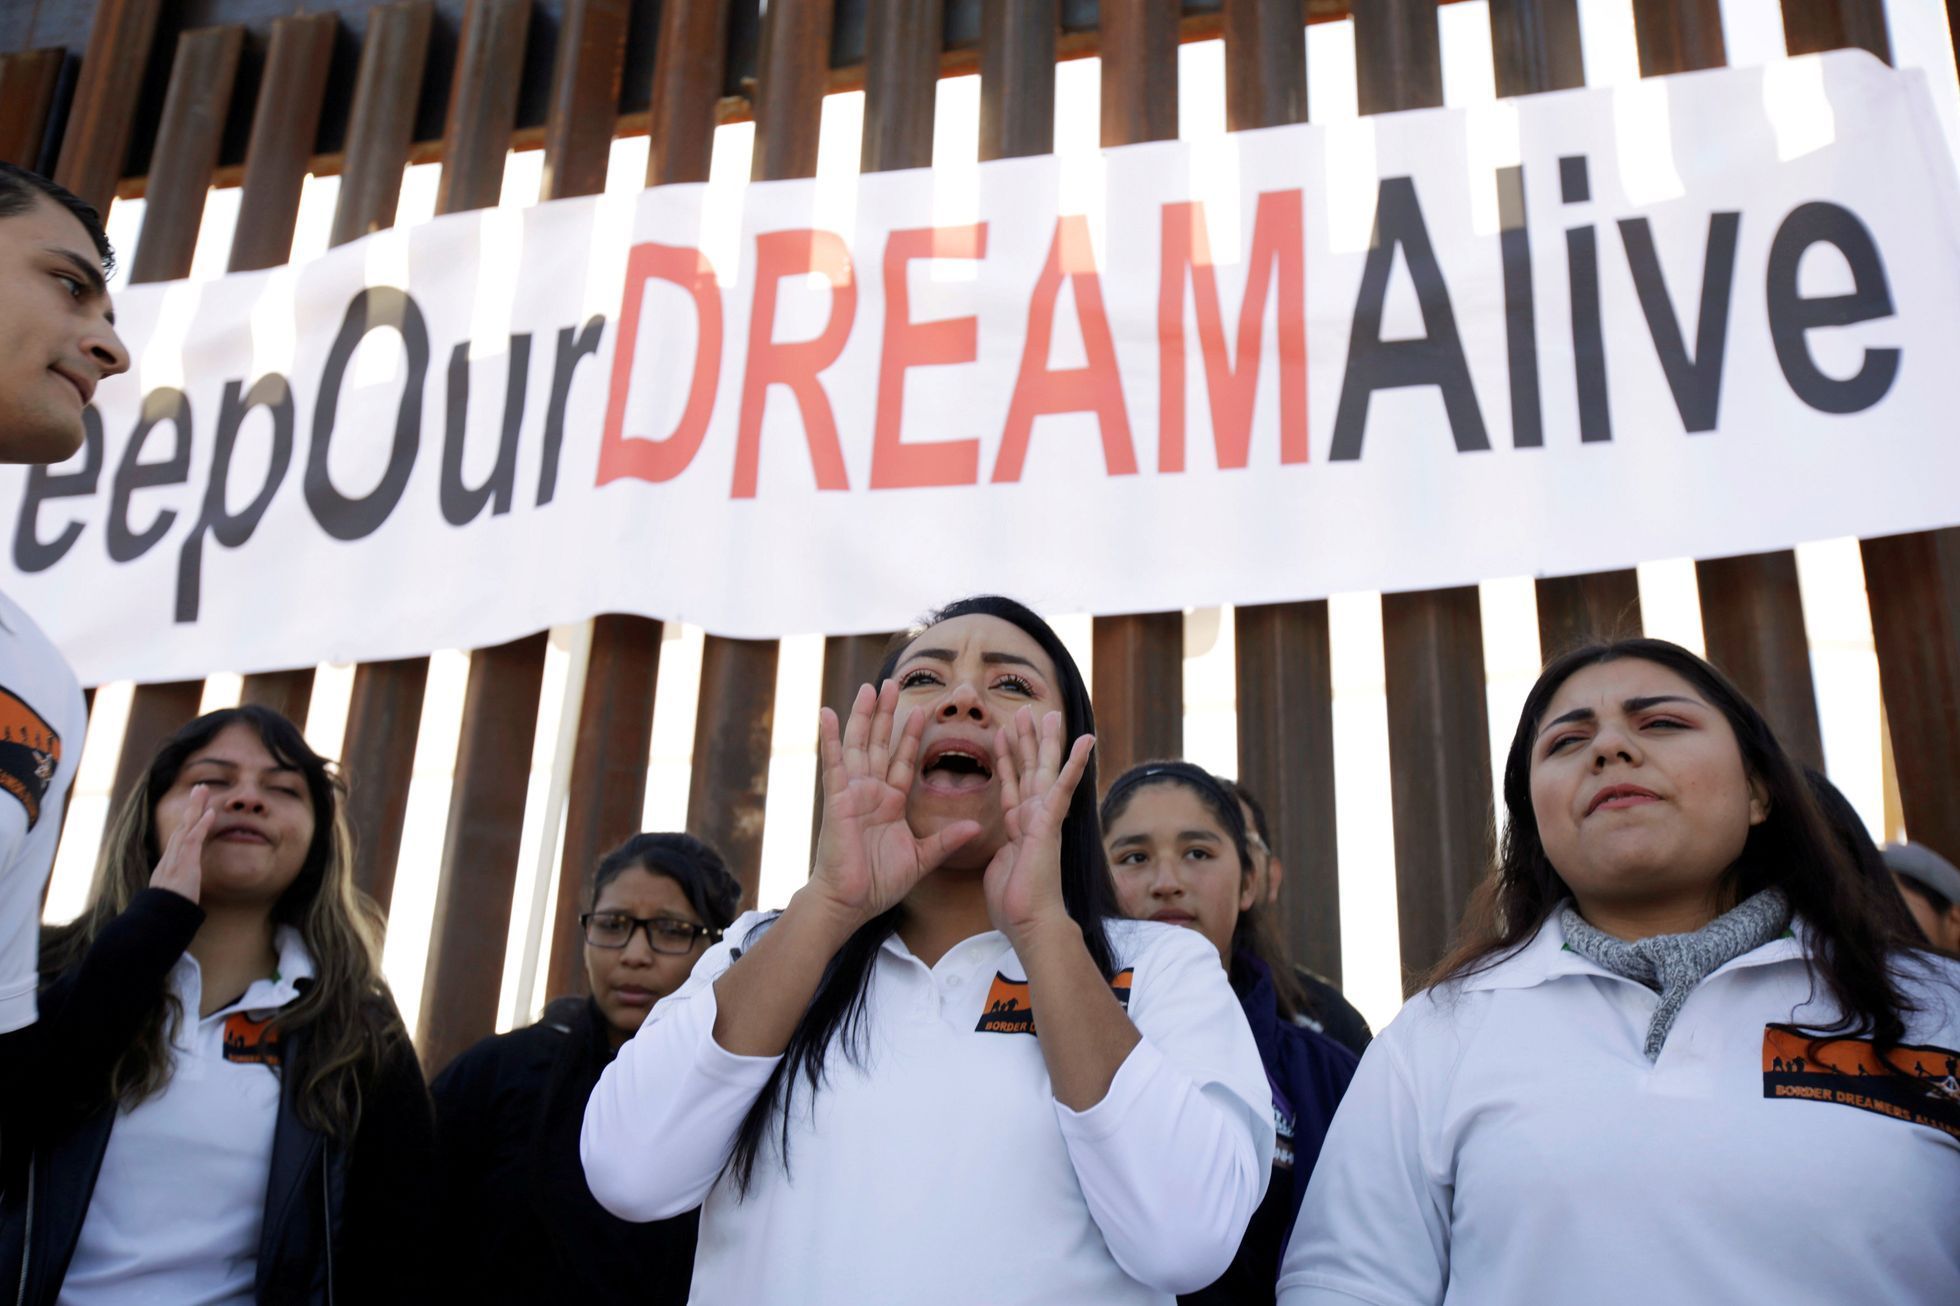 Rozzlobení "dreamers" během protestu proti politice Donalda Trumpa.